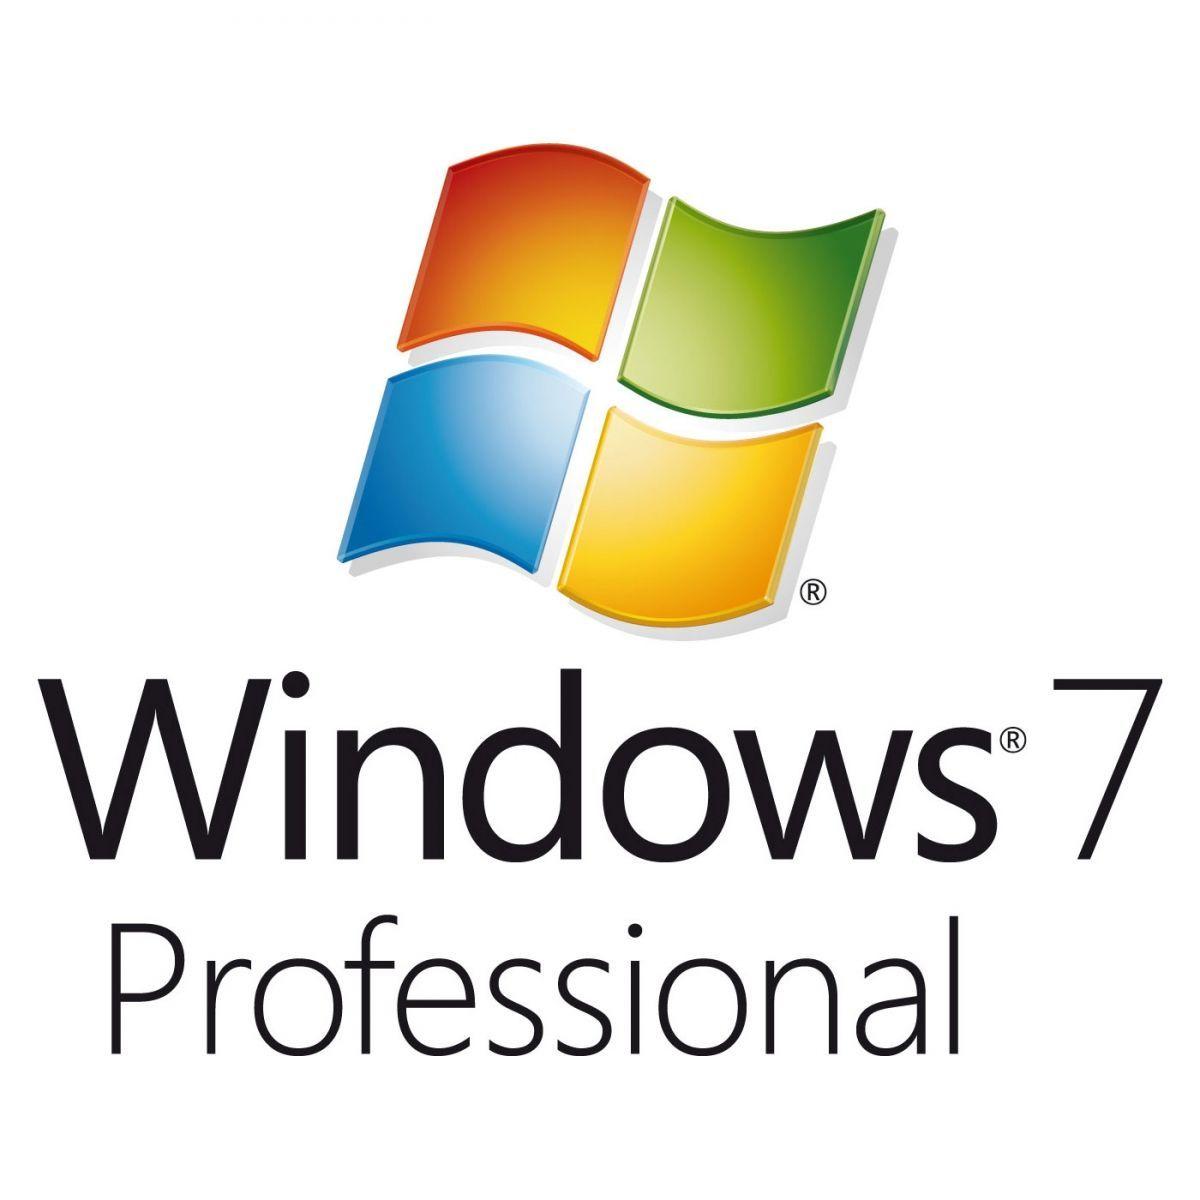 Windows 7 Pro Logo - Microsoft Windows 7 Professional Service Pack 1 64-bit Operating ...